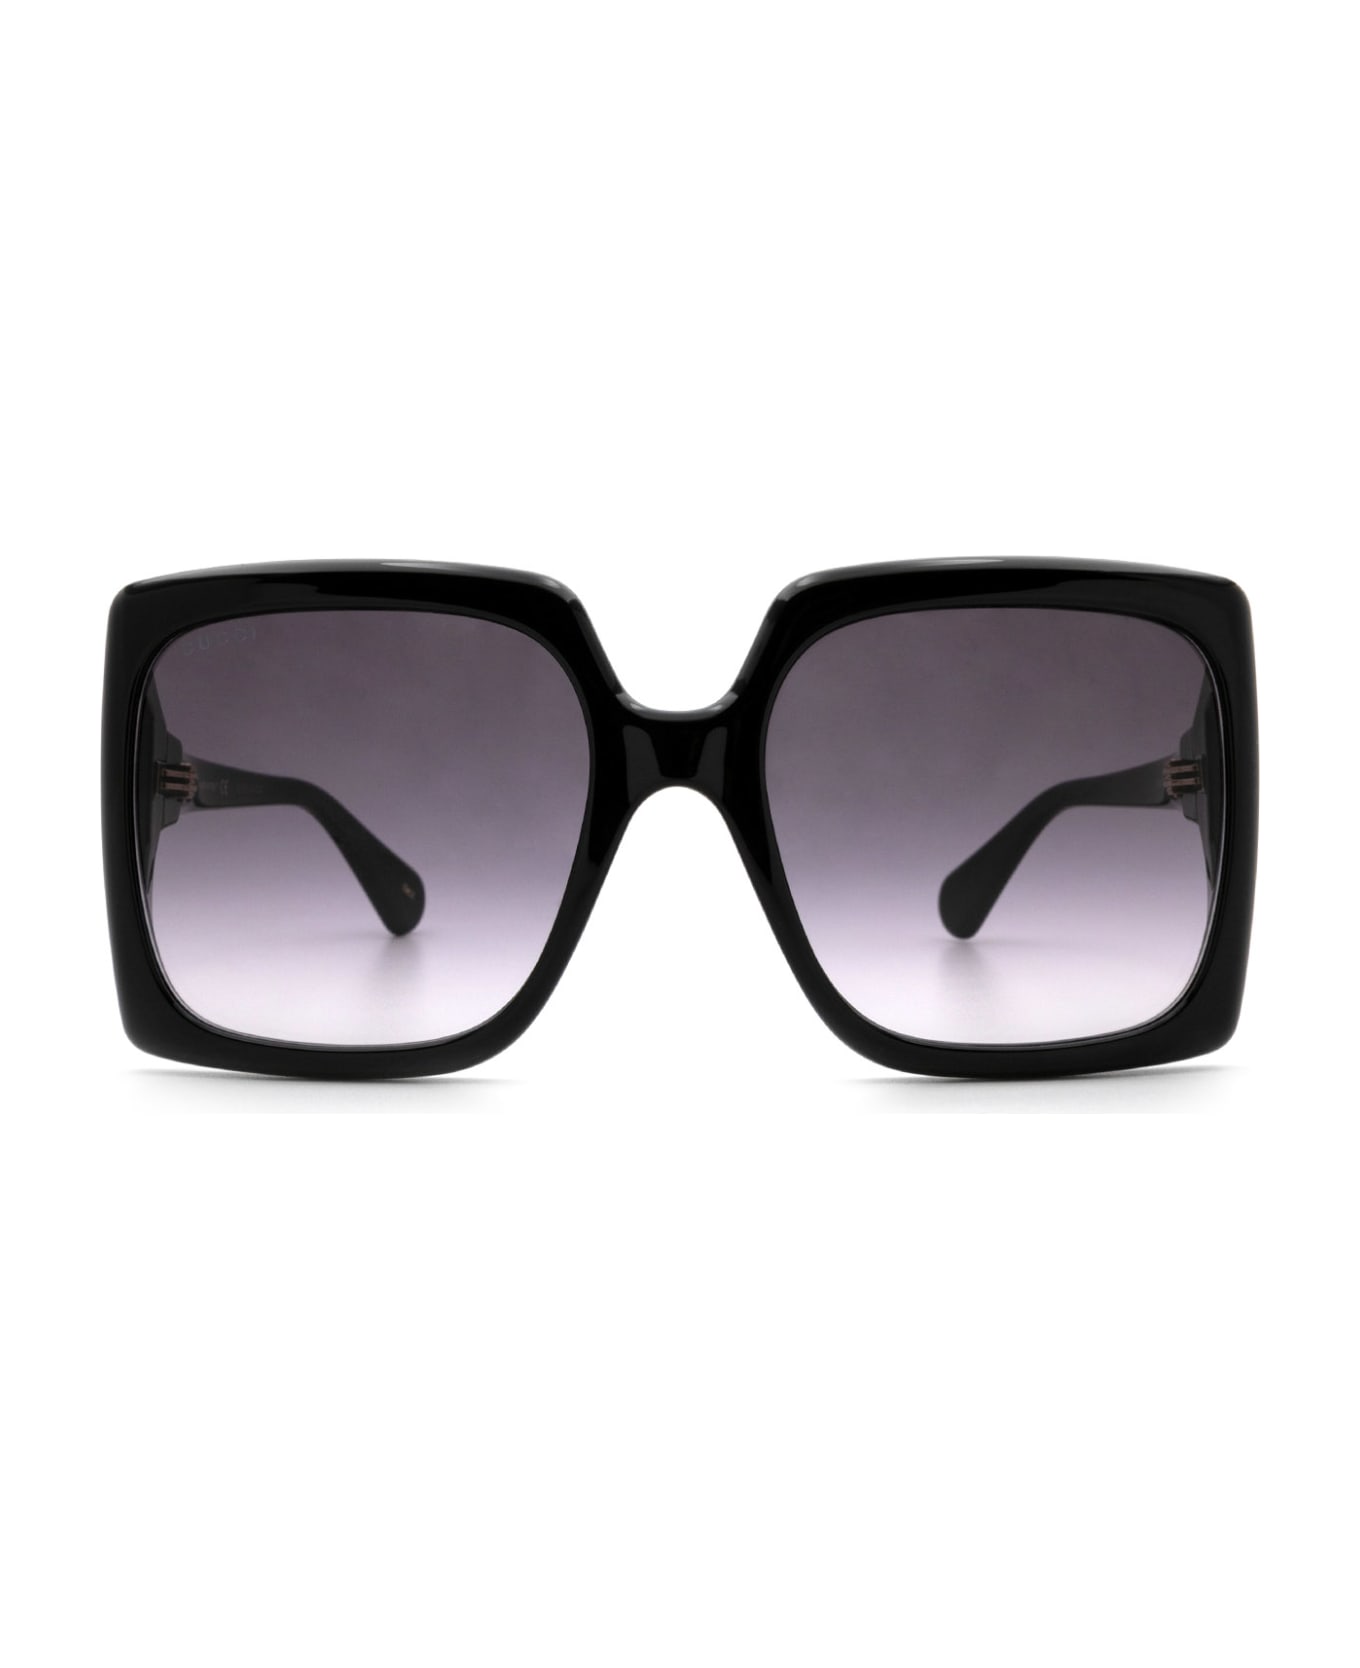 Gucci Eyewear Gg0876s Shiny Black Sunglasses - Shiny Black